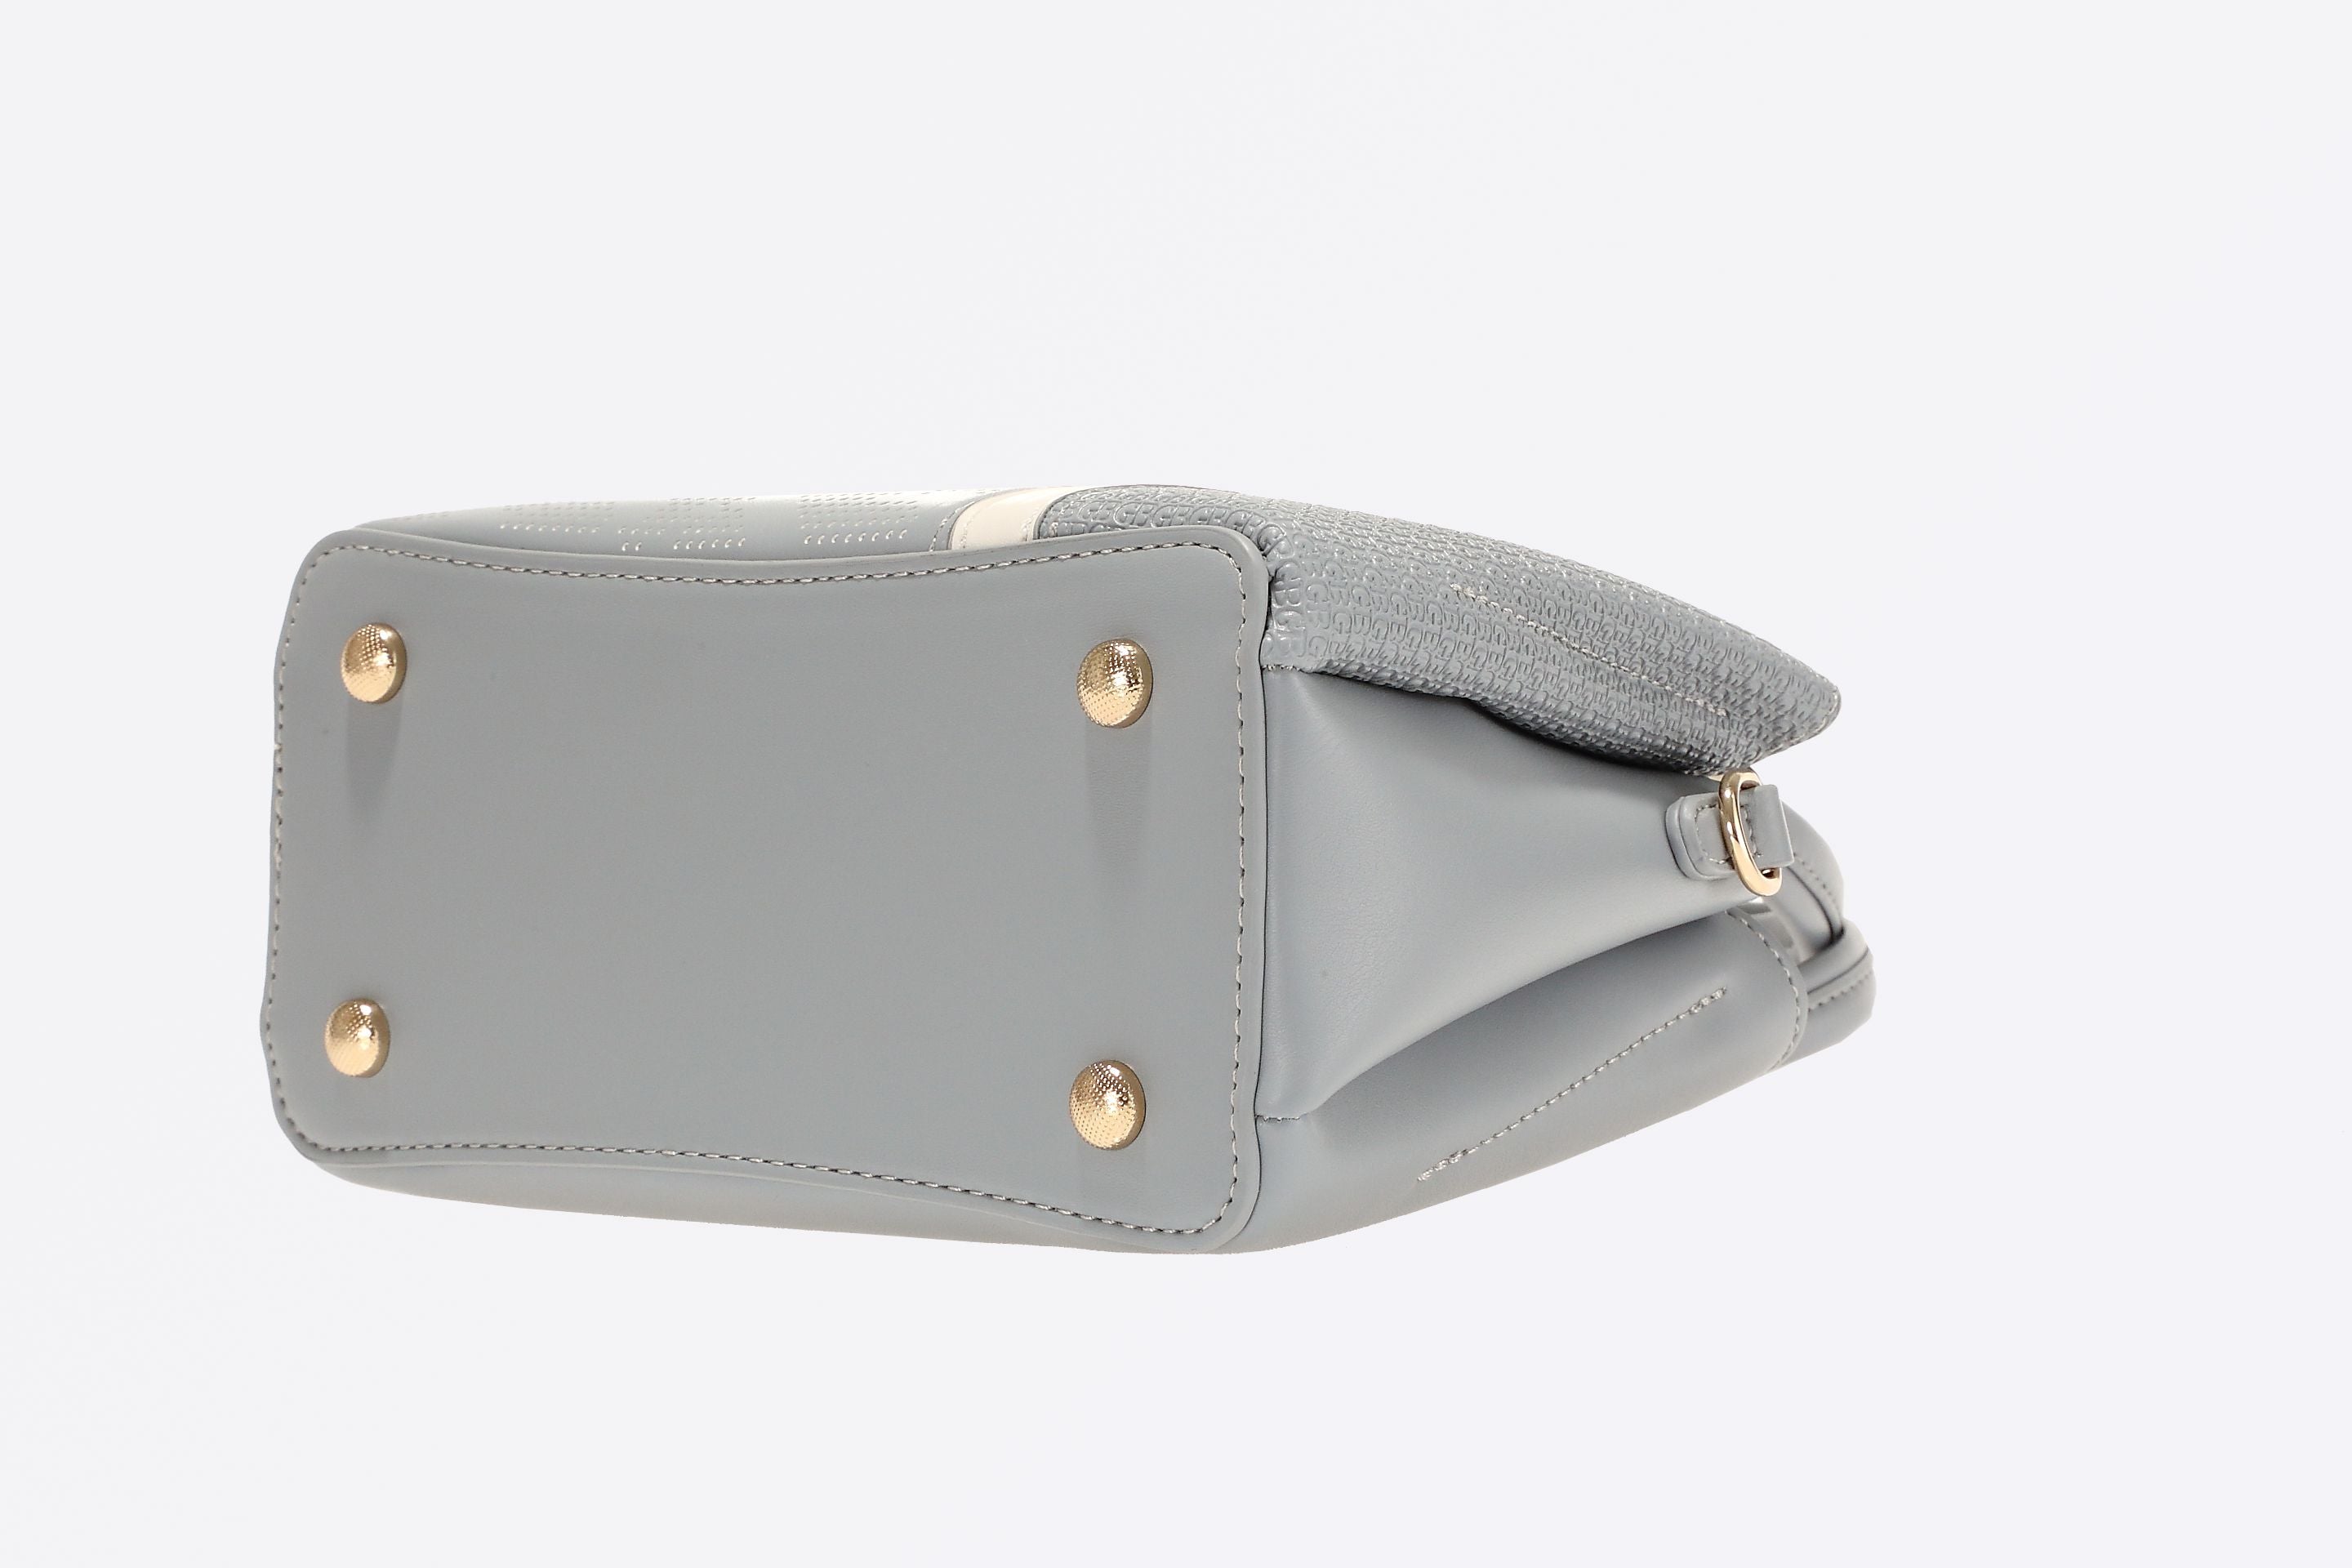 Medium Classic leather Handbag - Light Blue